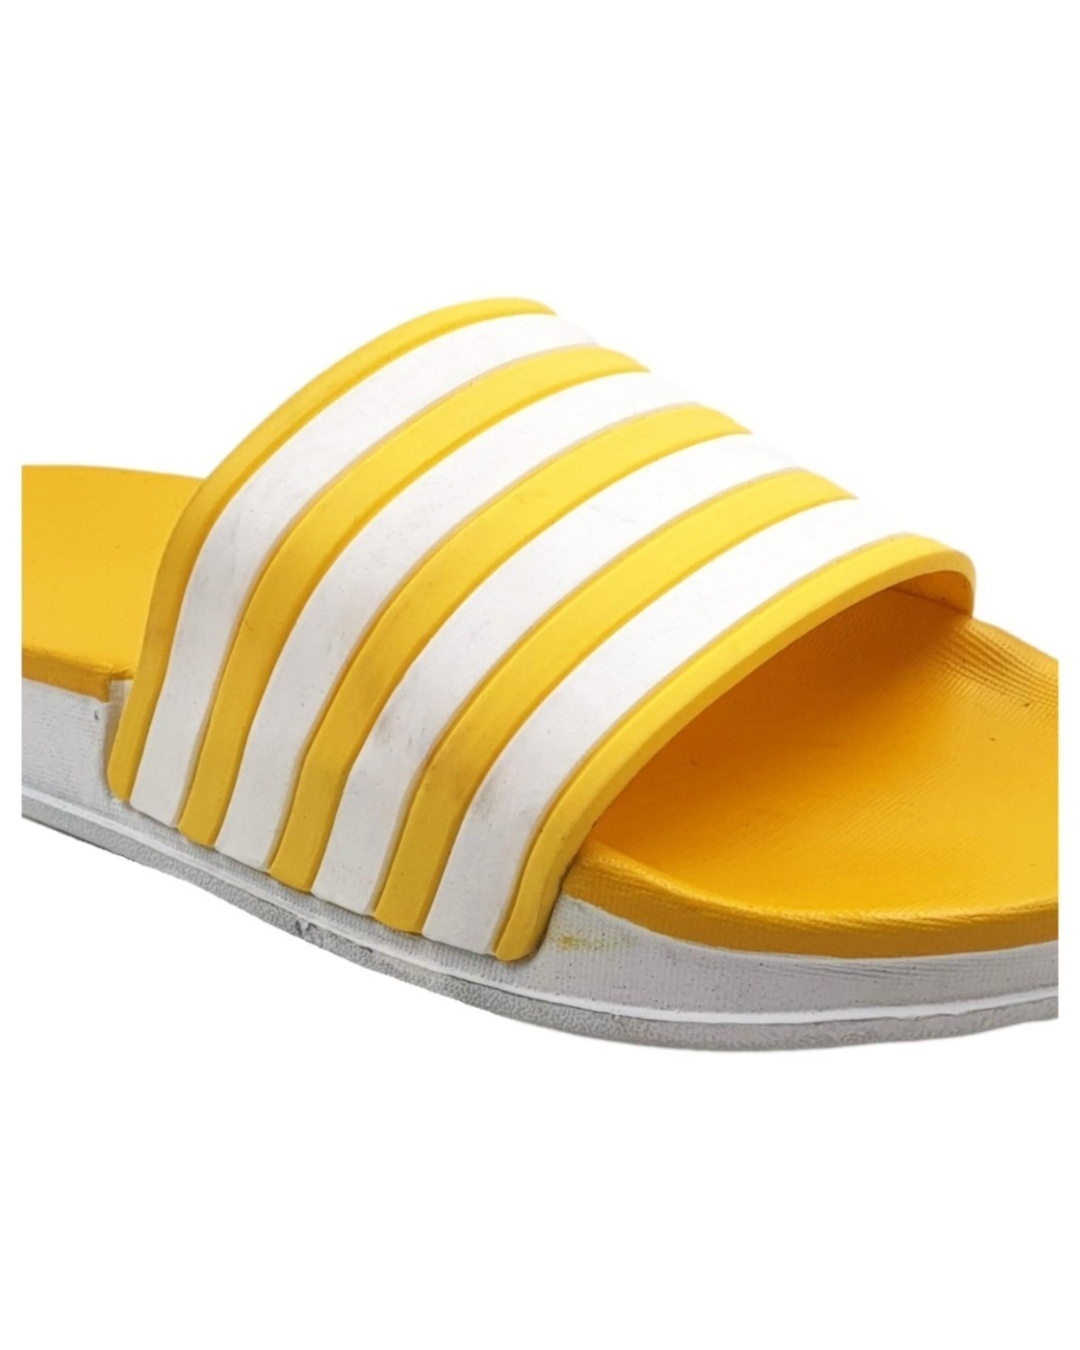 Shop Women's Yellow Sliders